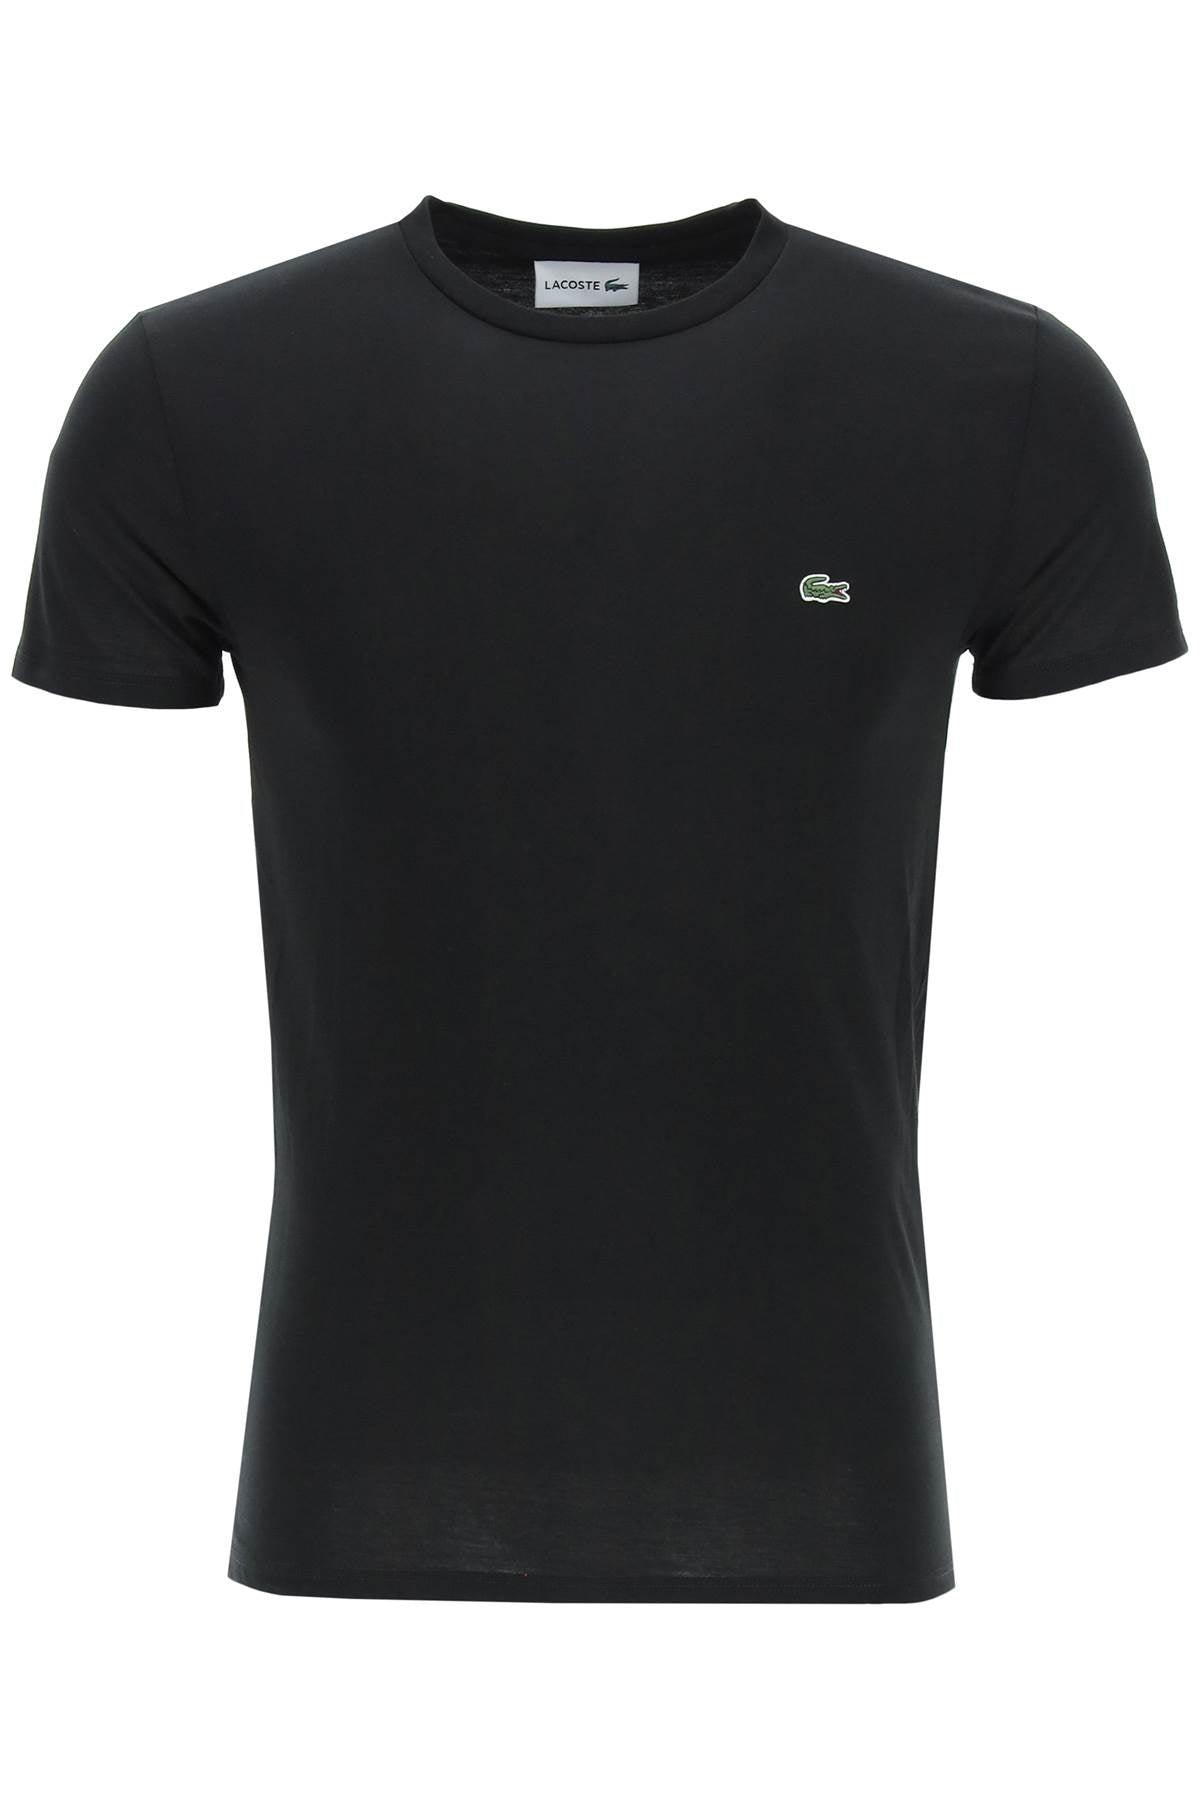 Lacoste Logo T-shirt in Black for Men | Lyst